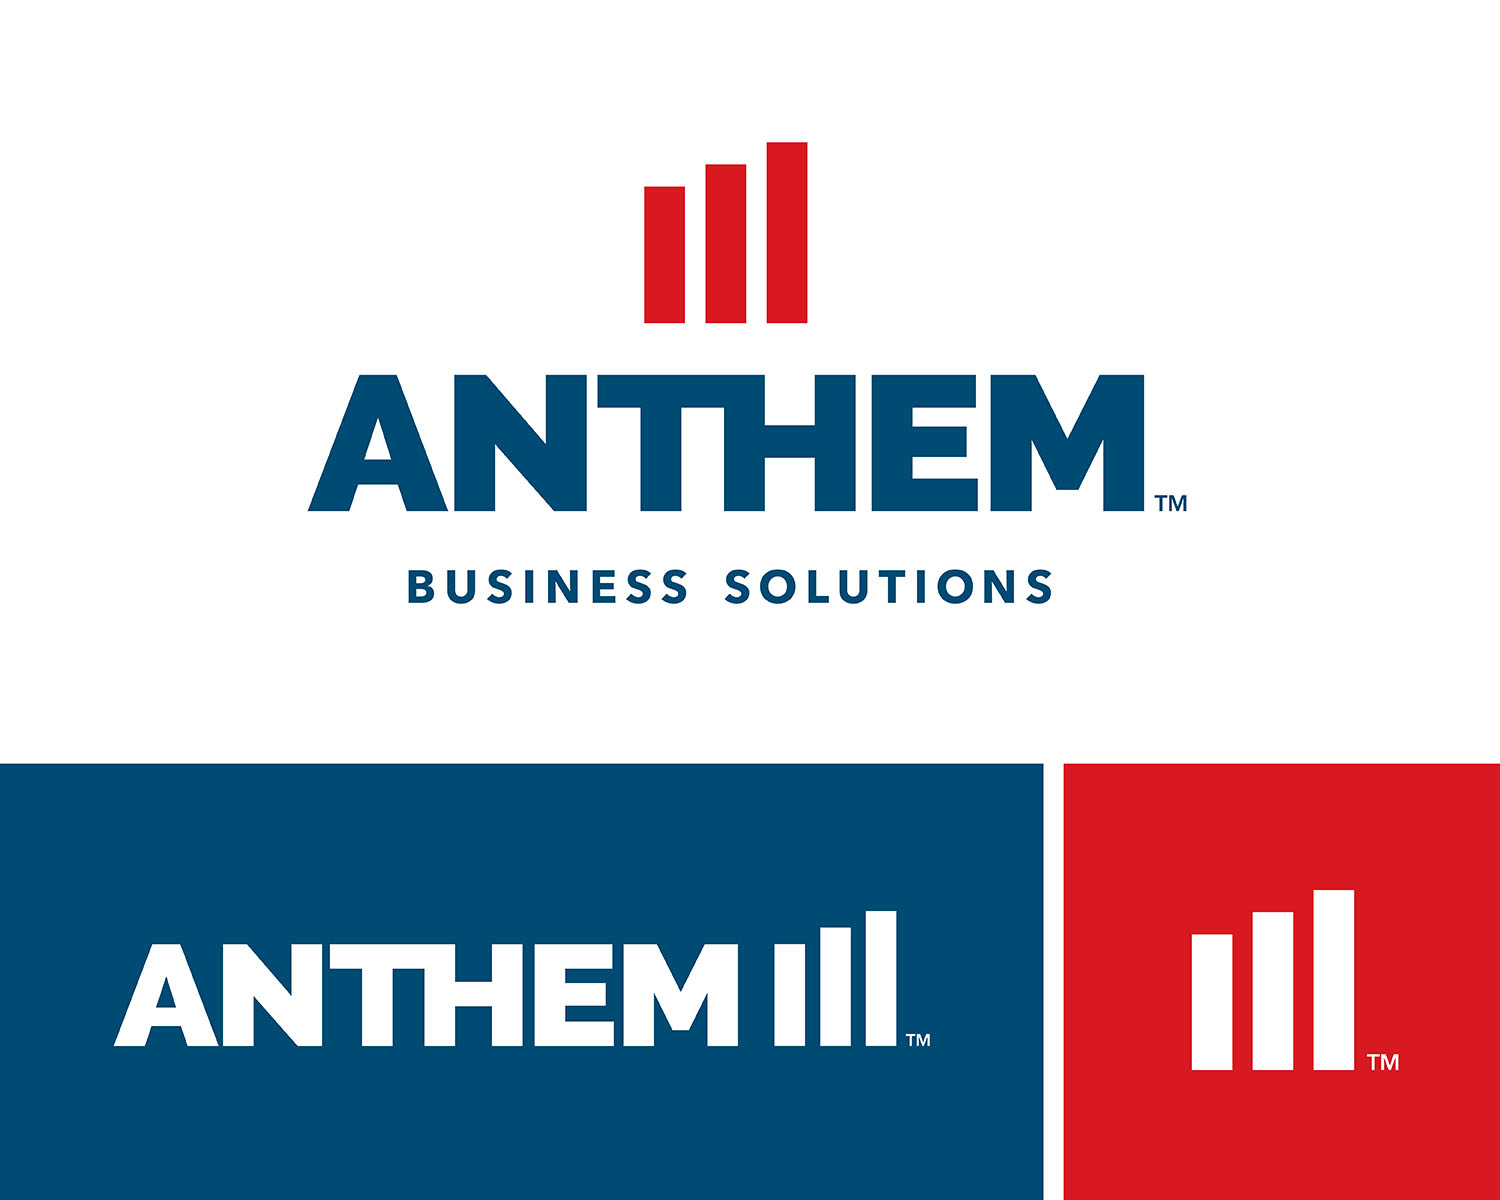 Anthem Business Solutions Logos